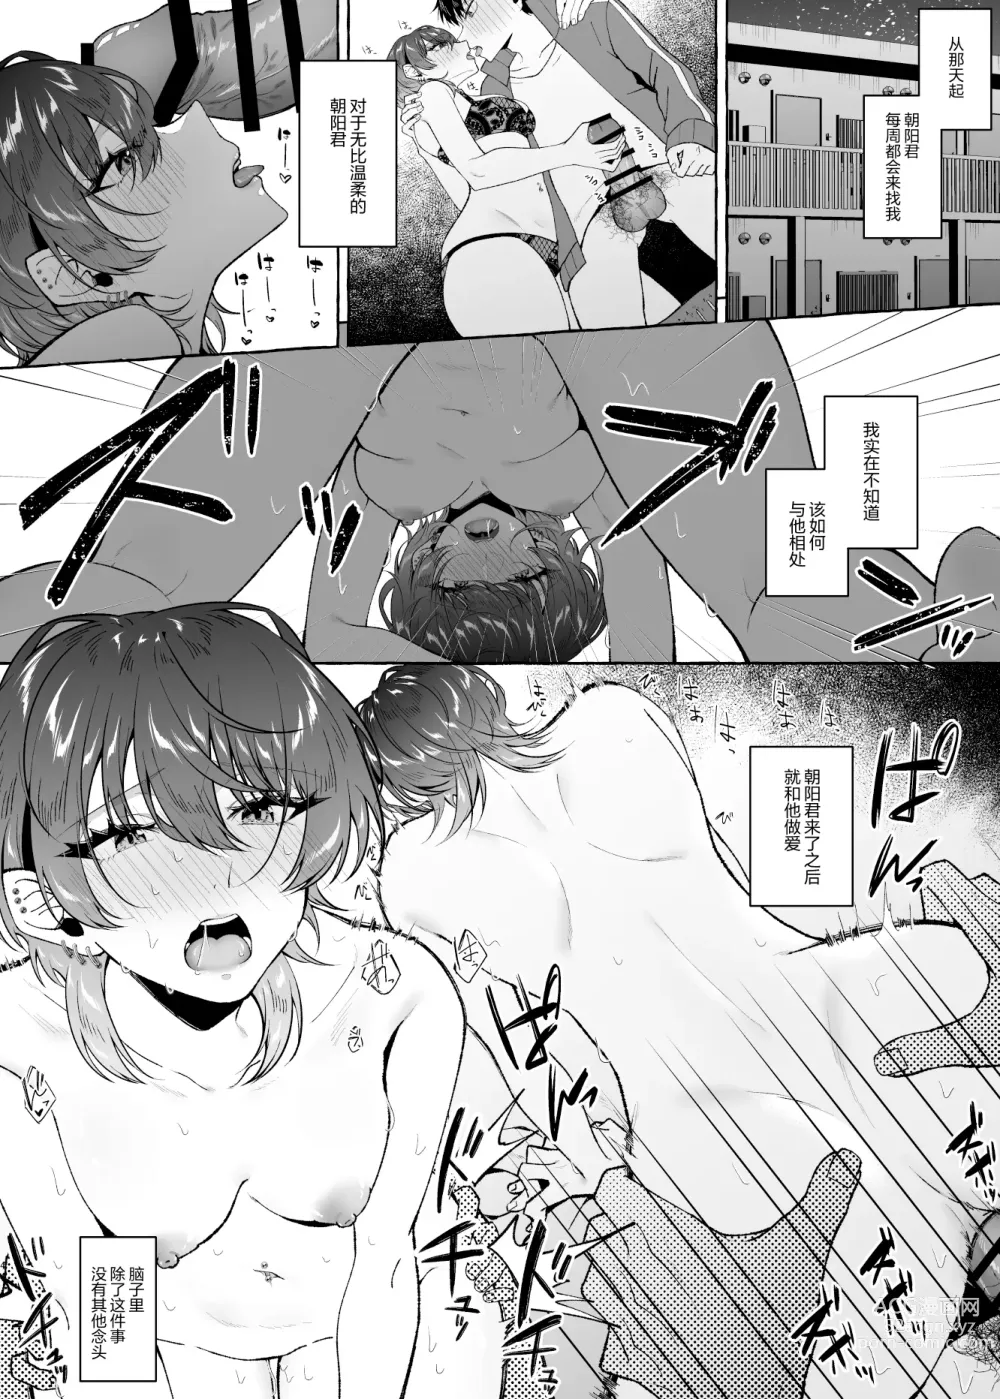 Page 44 of doujinshi Sex Shitara Meccha Yanda